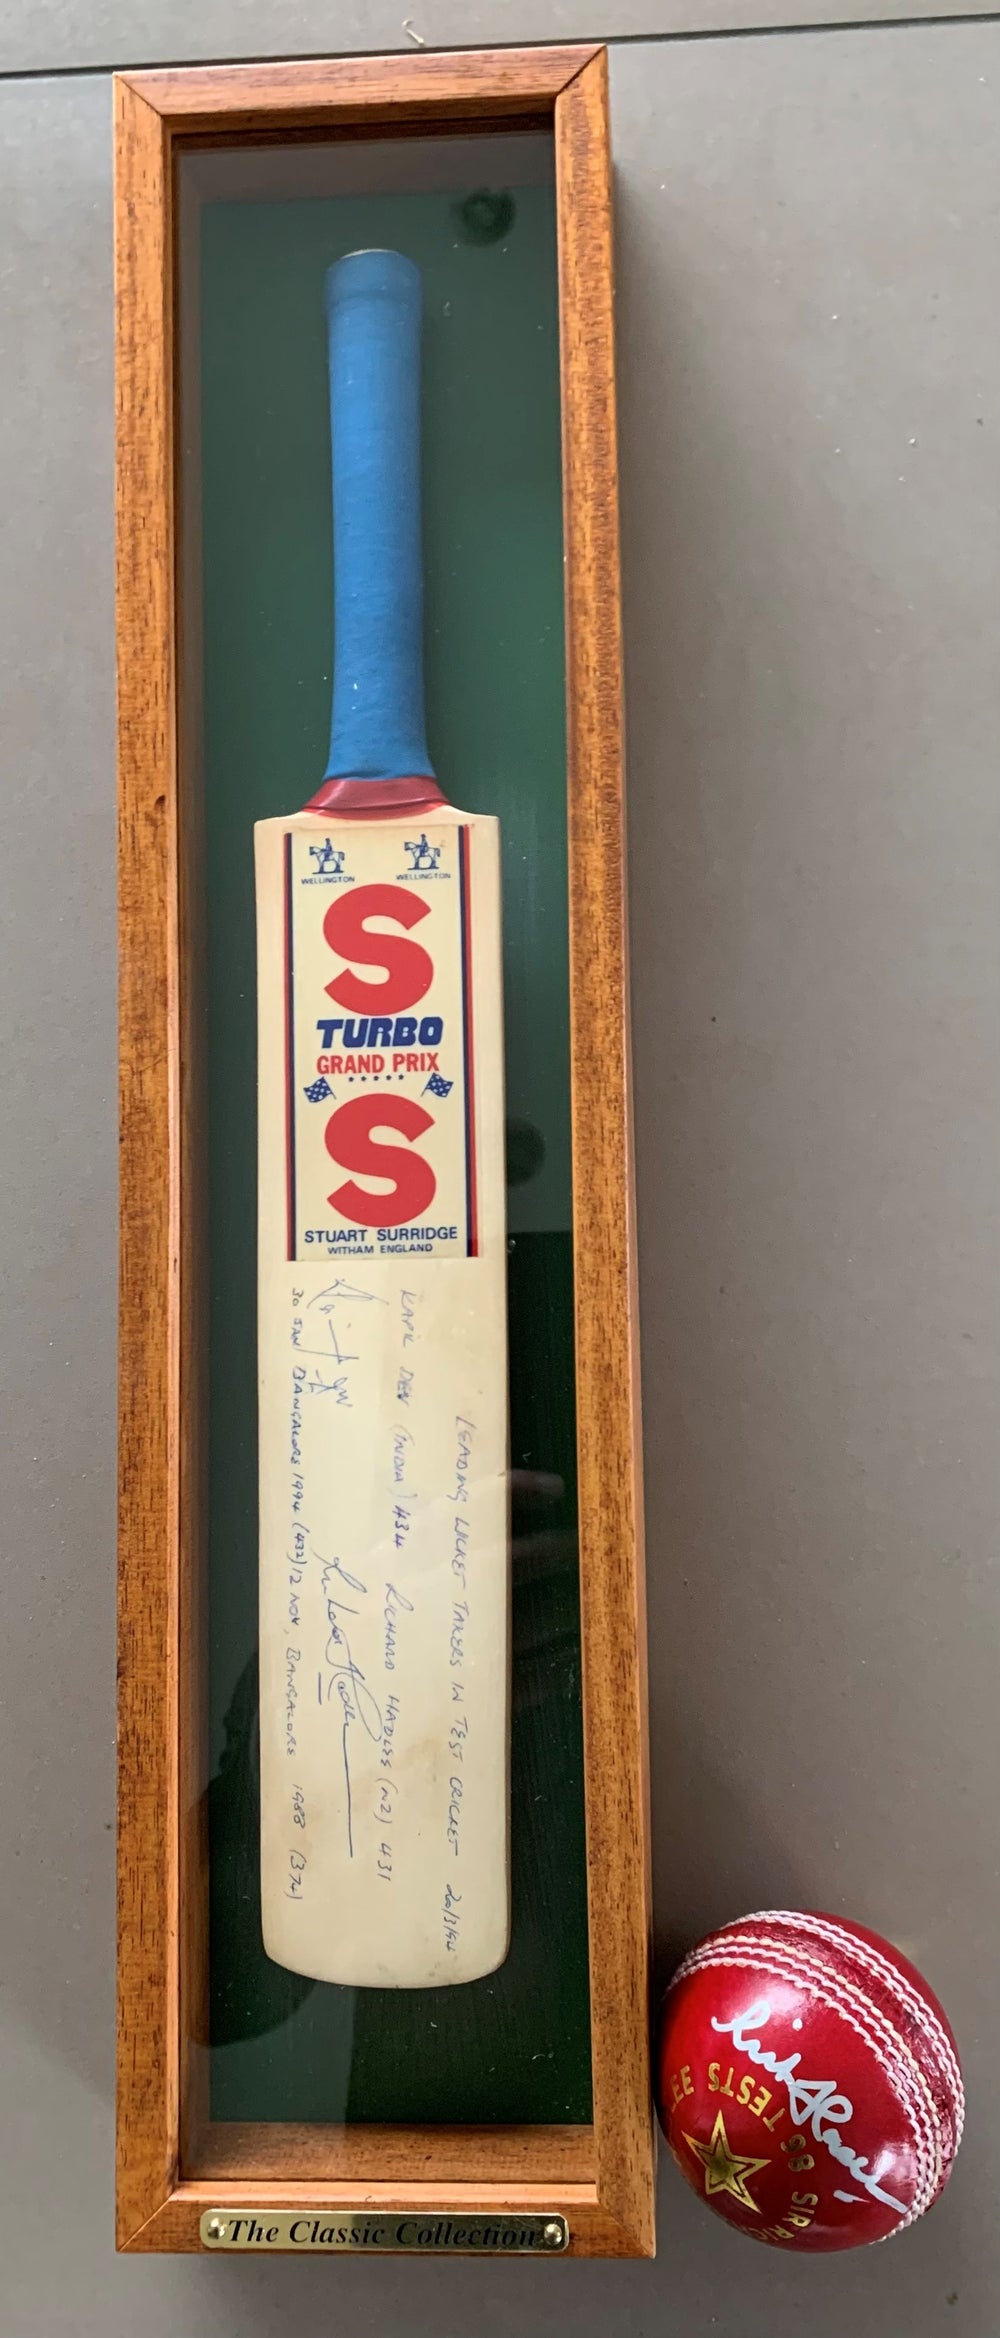 Mini Cricket Bat Framed - "Hadlee & Kapil Dev"